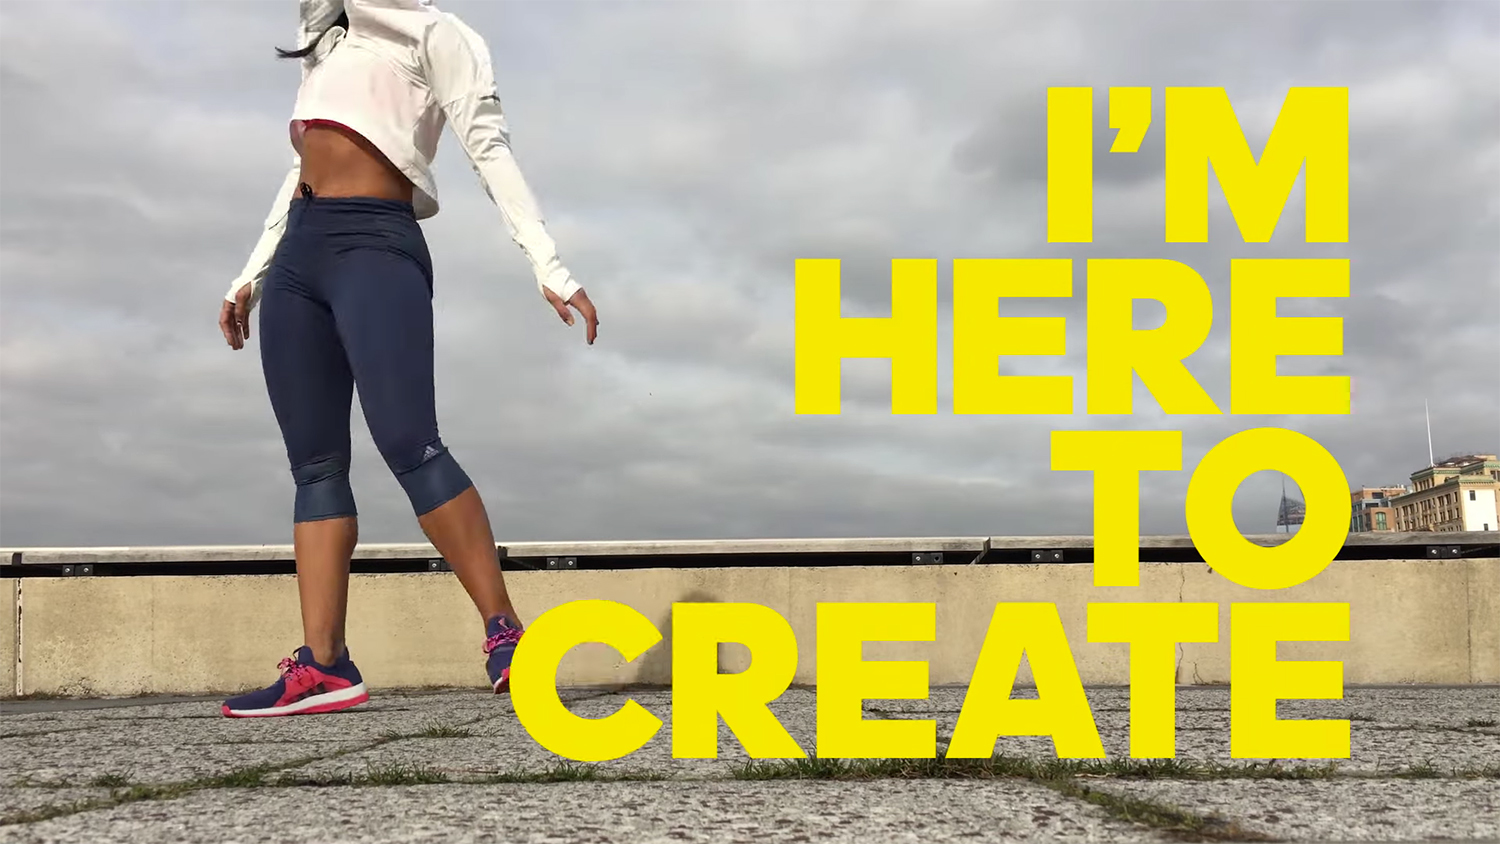 Короткометражки от Adidas восхваляют креативность женщин